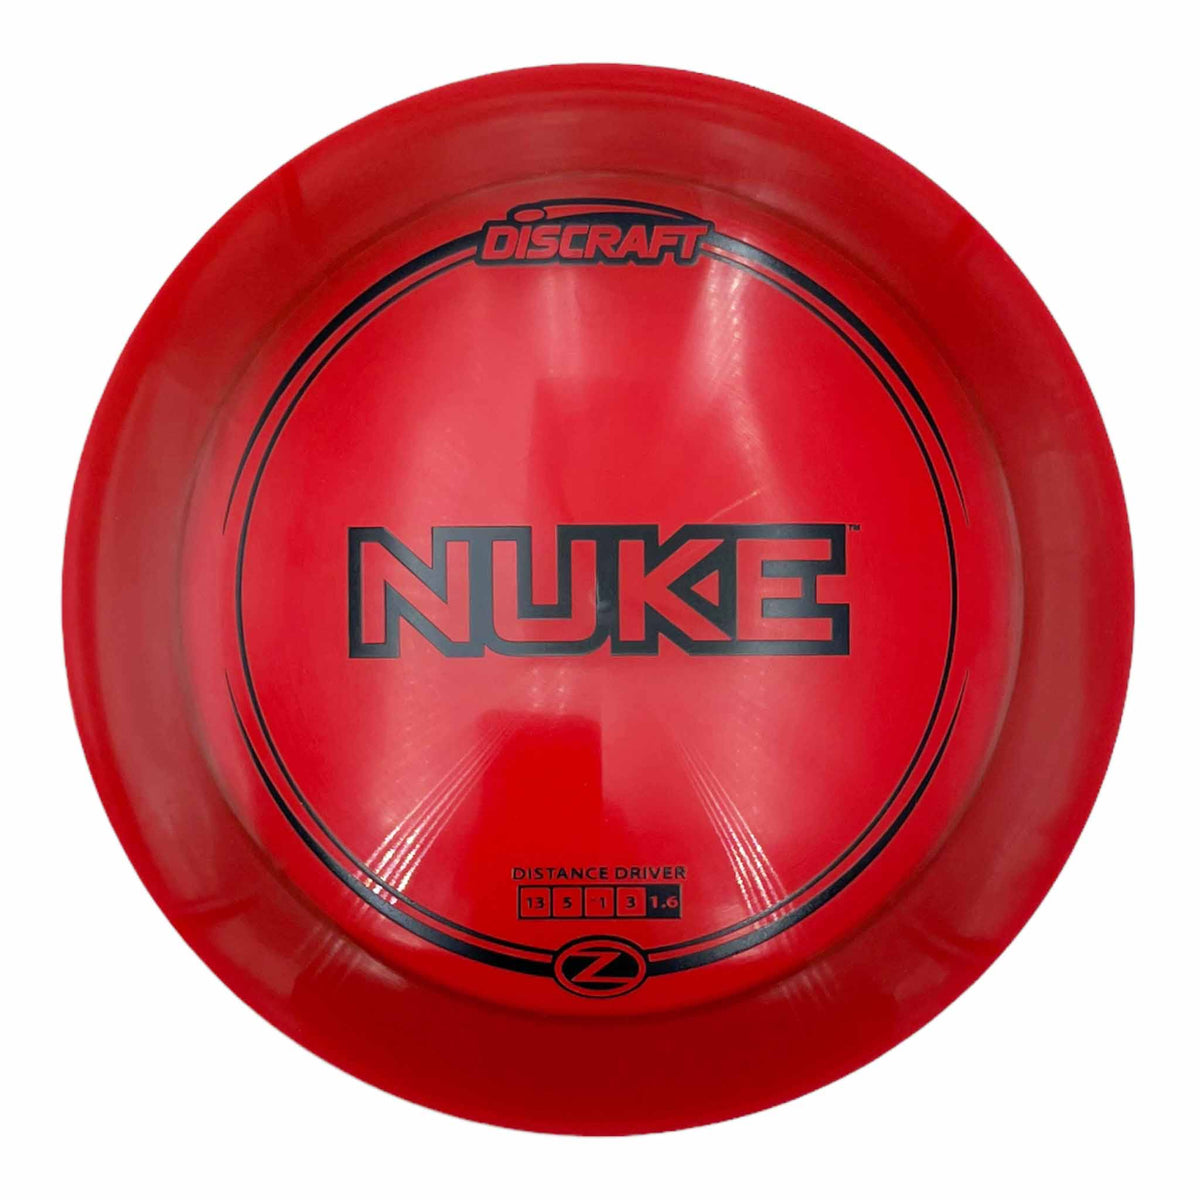 Discraft Z Line Nuke distance driver - Red